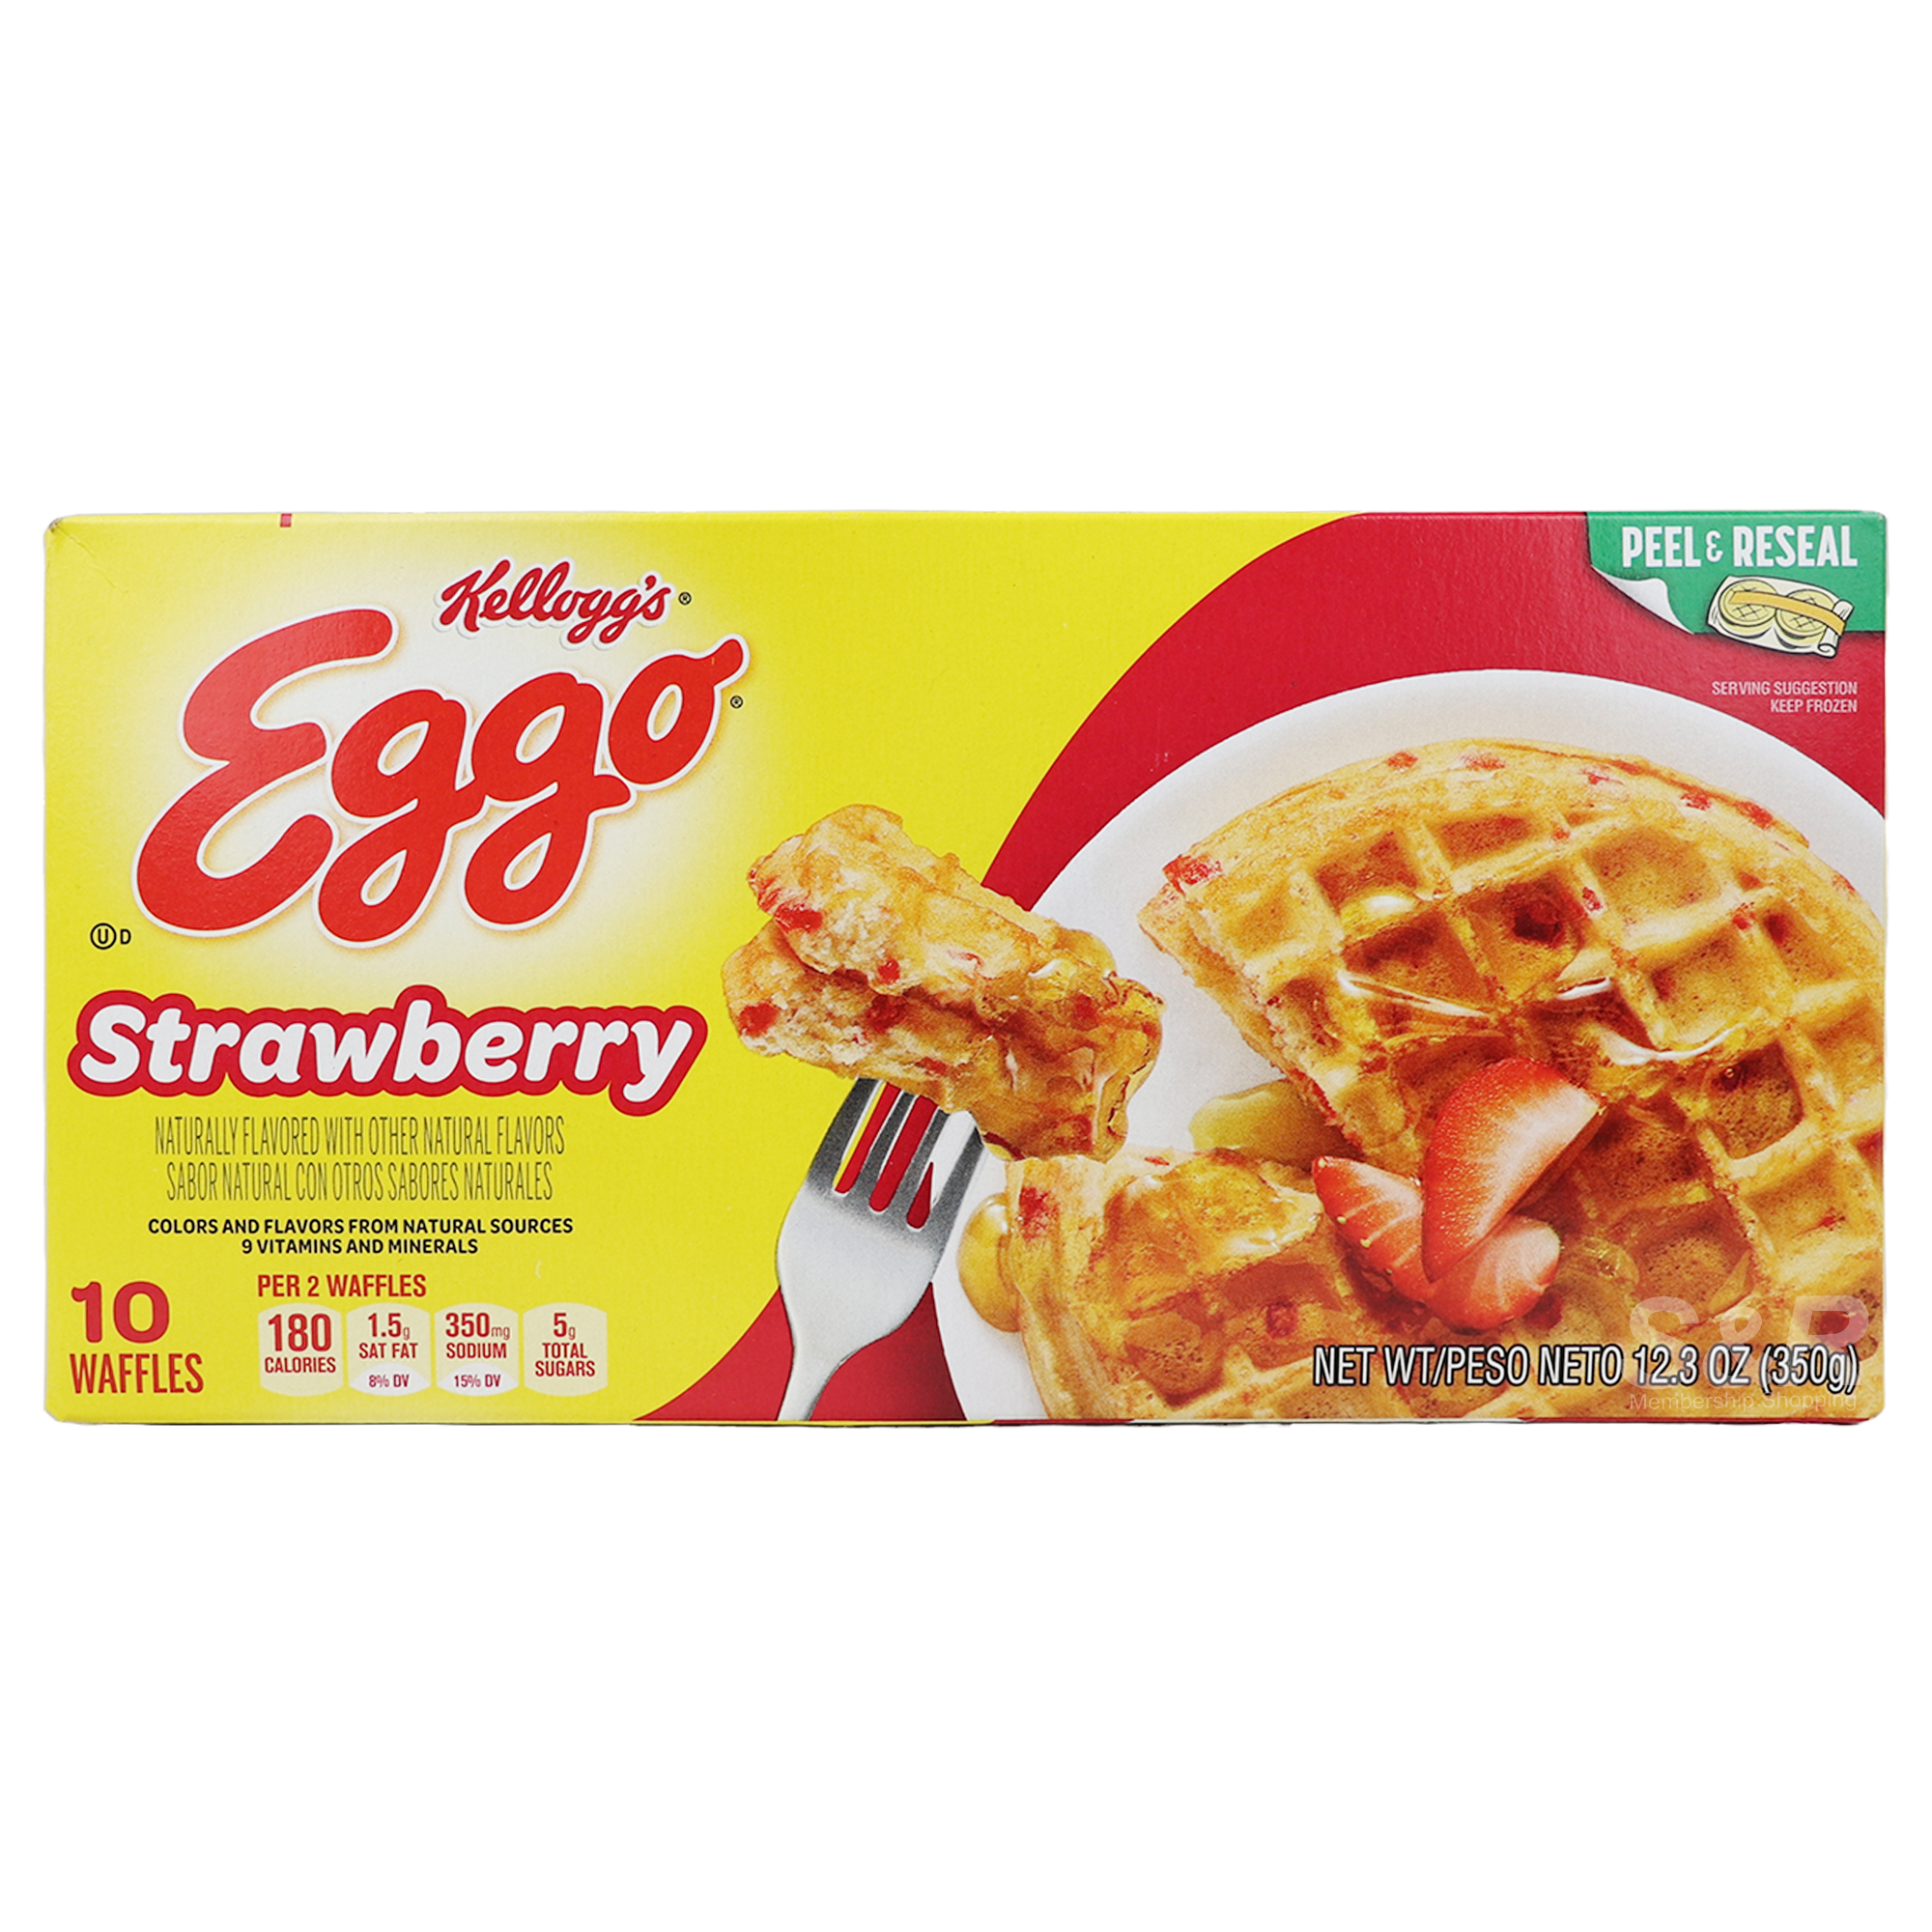 Kellogg's Eggo Strawberry Flavor 350g